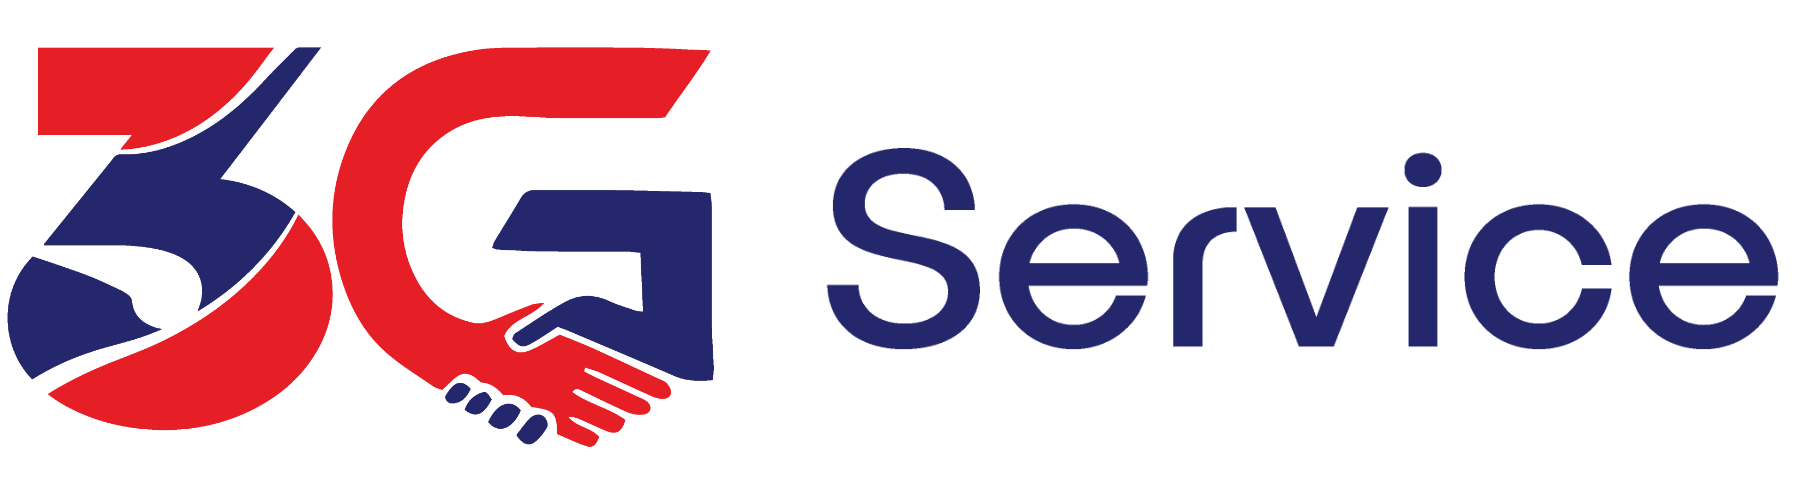 Logo 3G Service Orizzontale